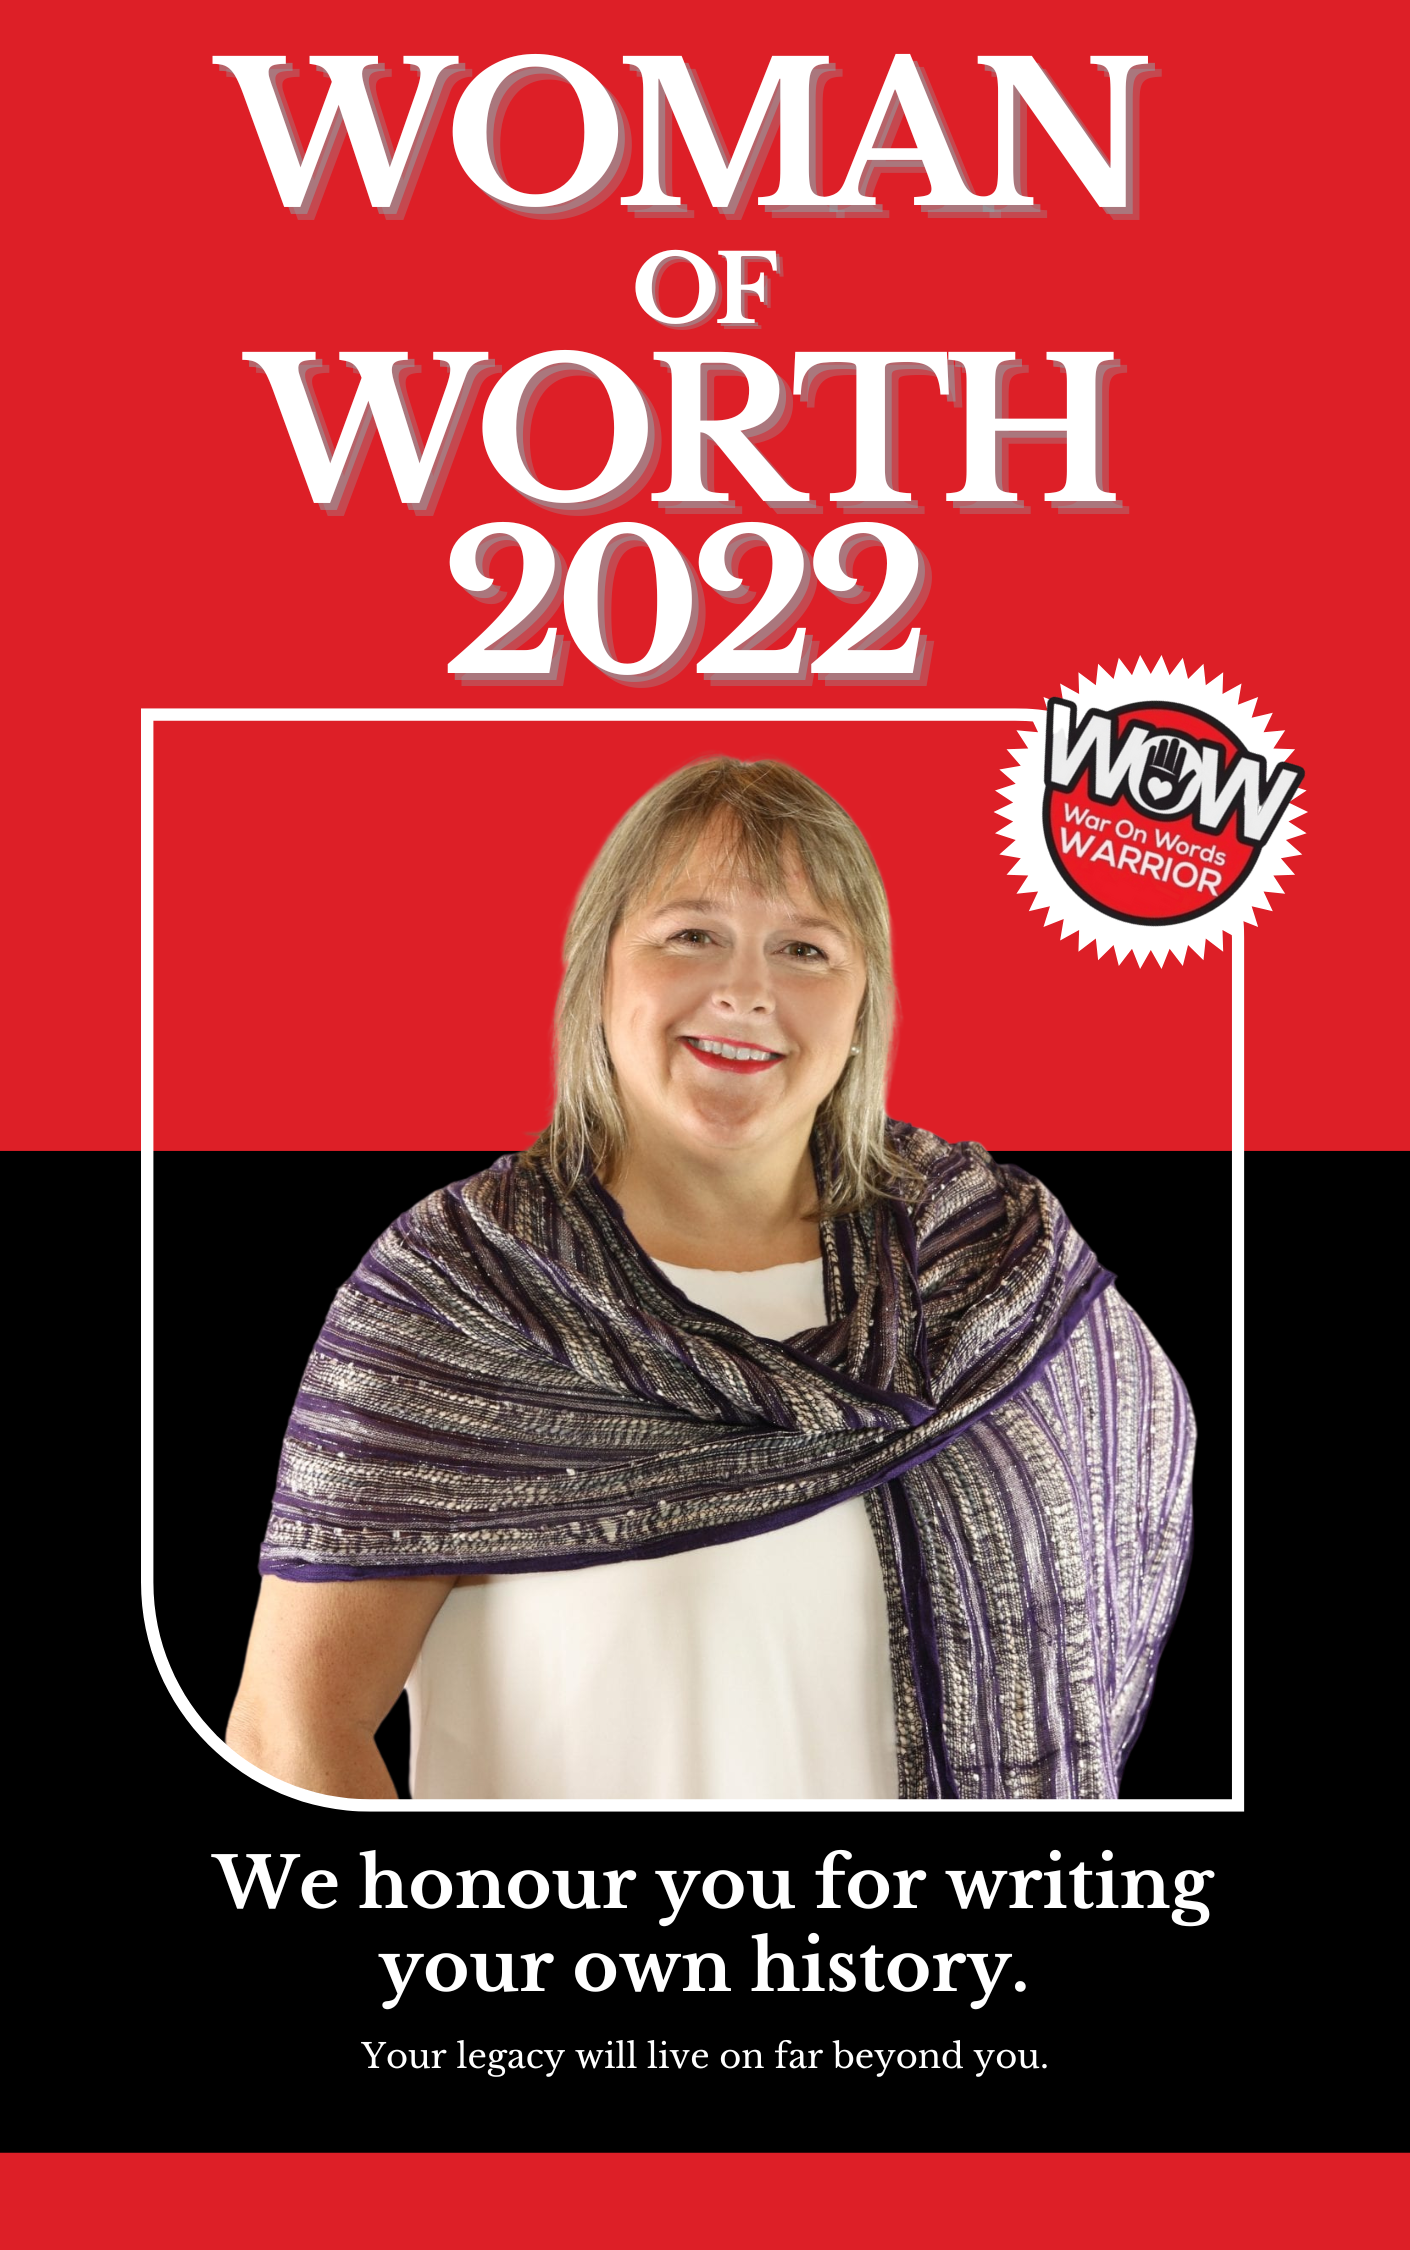 WOMAN OF WORTH 2022